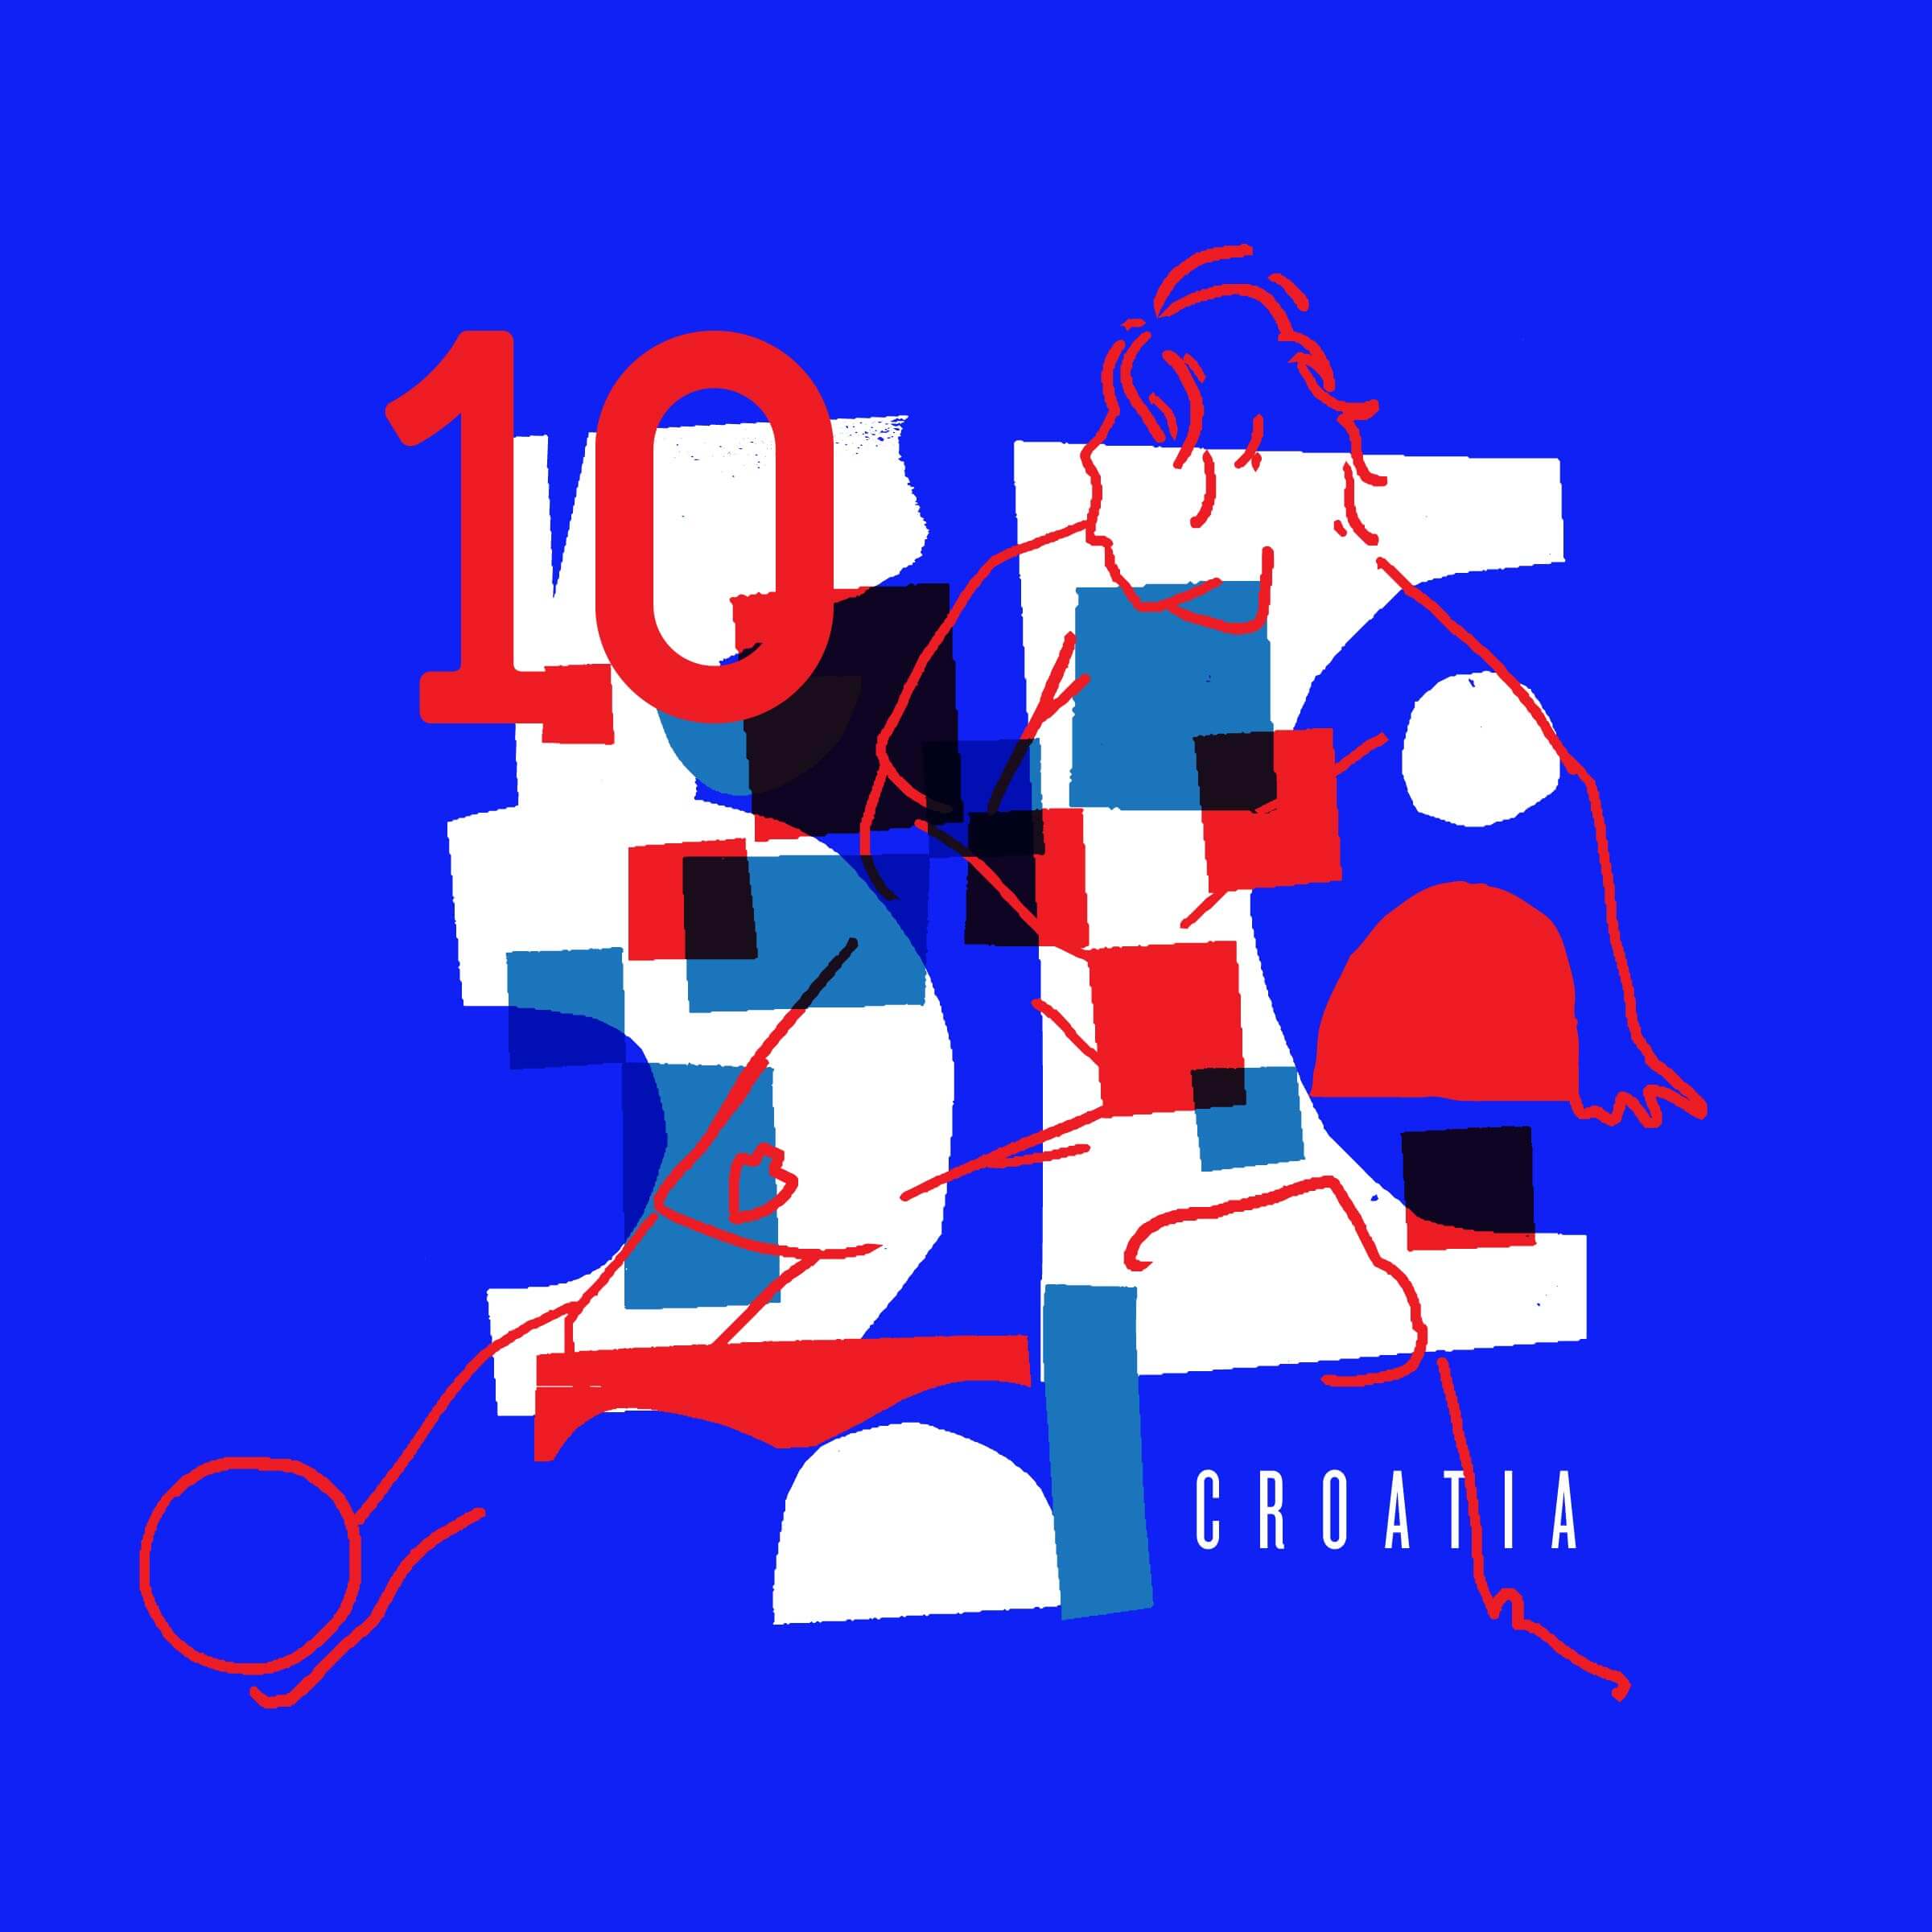 Croatia-16